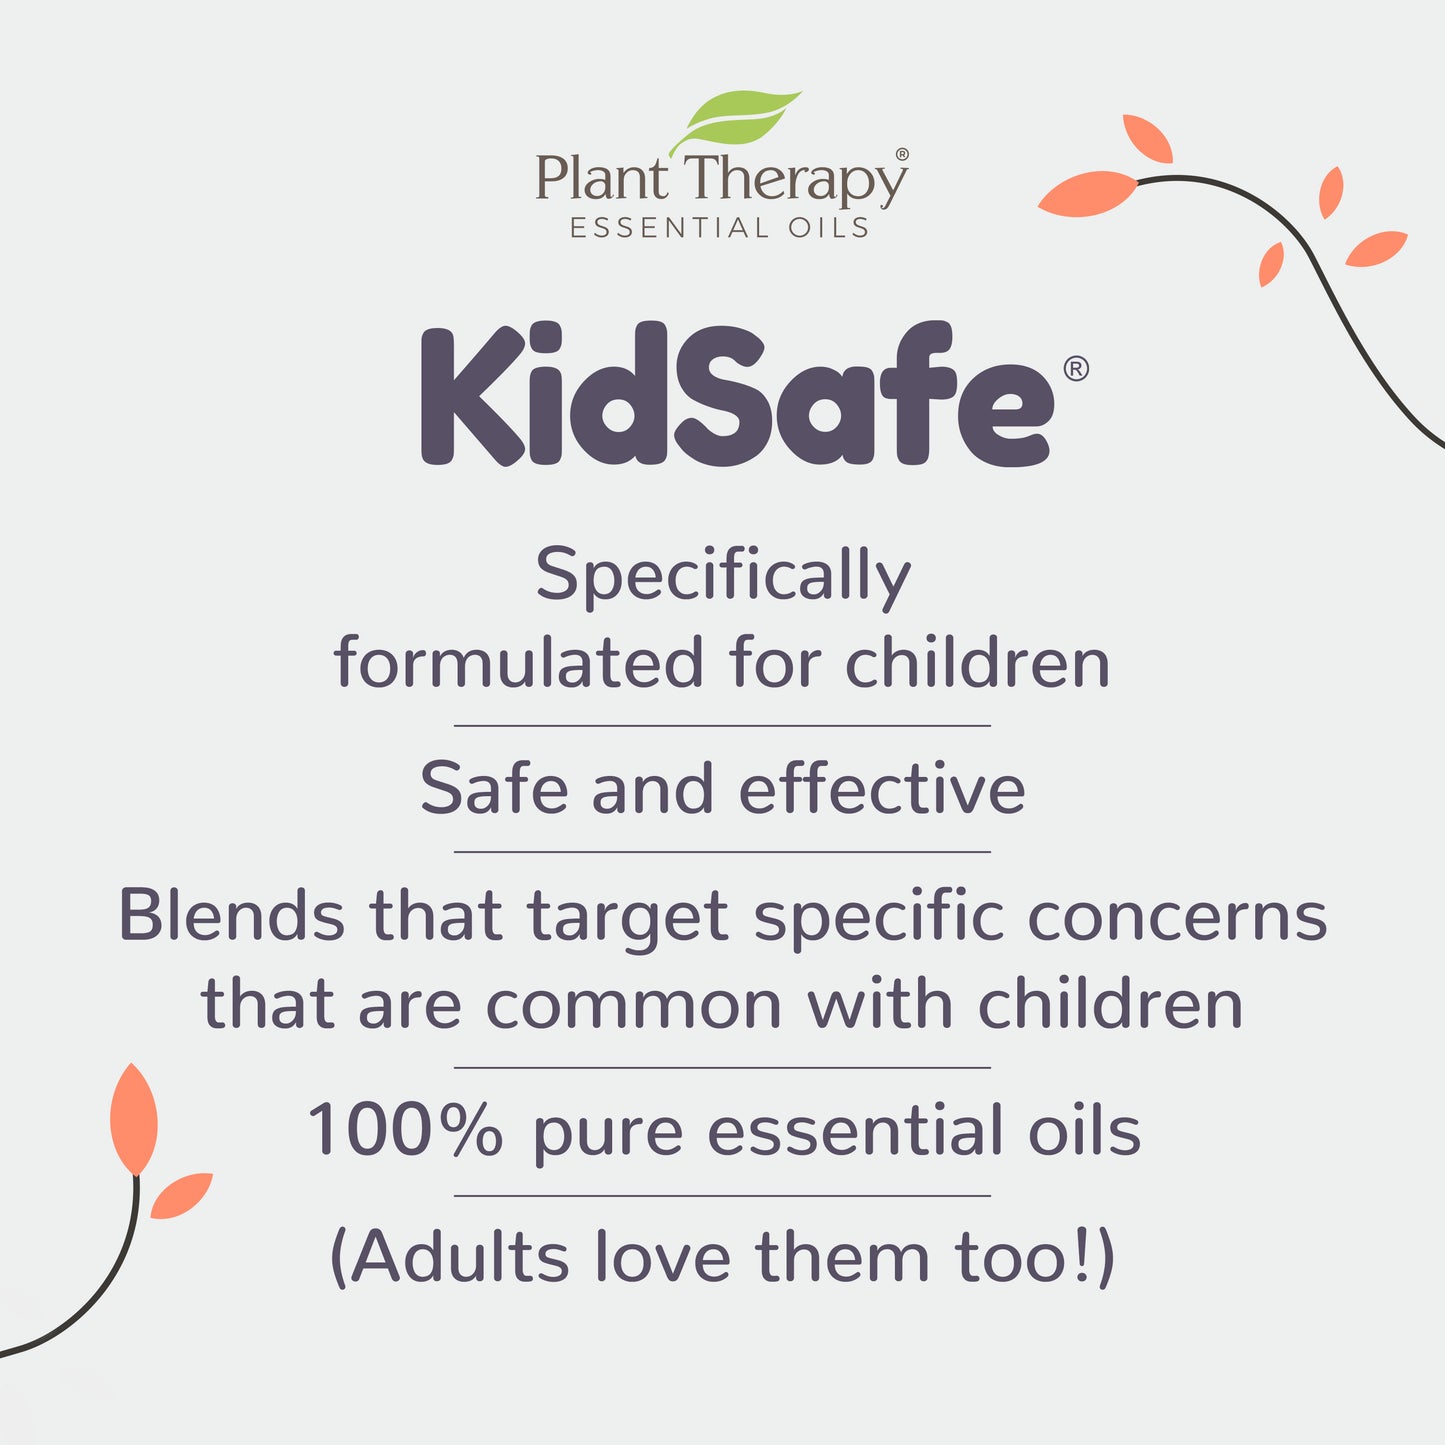 KidSafe Organic Blends Set